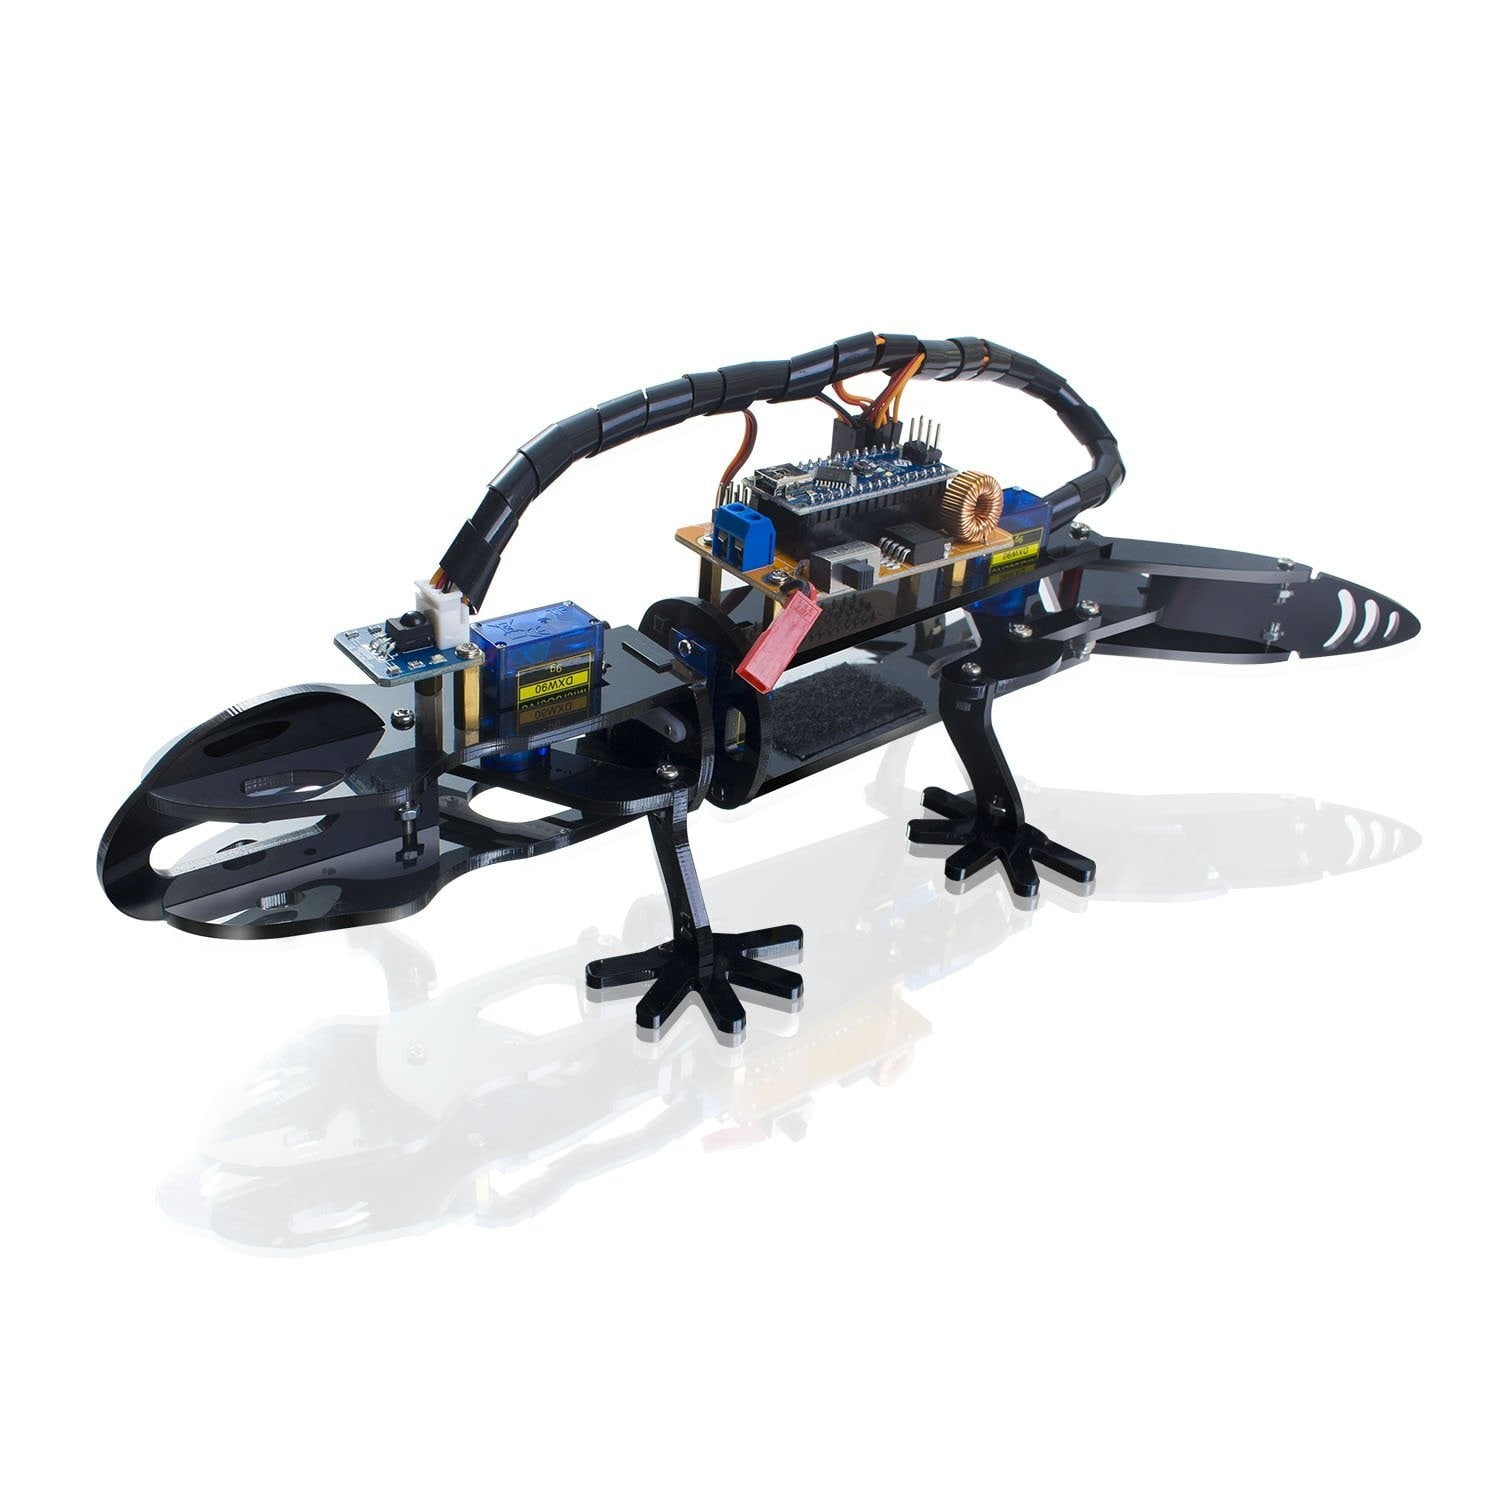 DIY Bionic Robot Lizard – Kit for Beginners